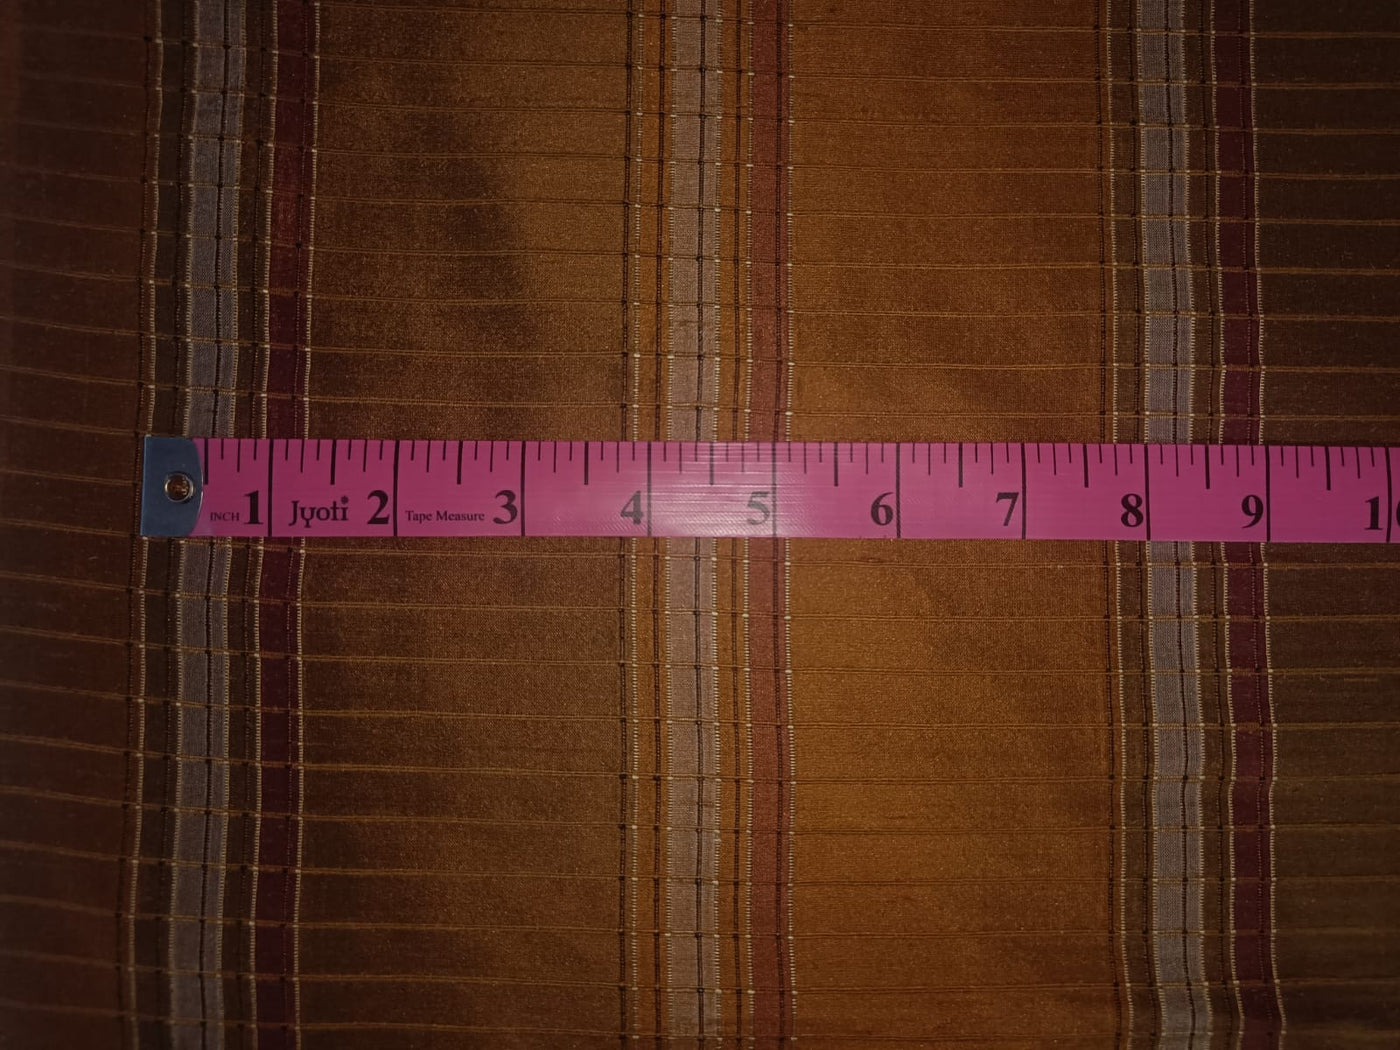 Silk Dupioni Shades of Brown Color plaid Fabric DUPC93[3]